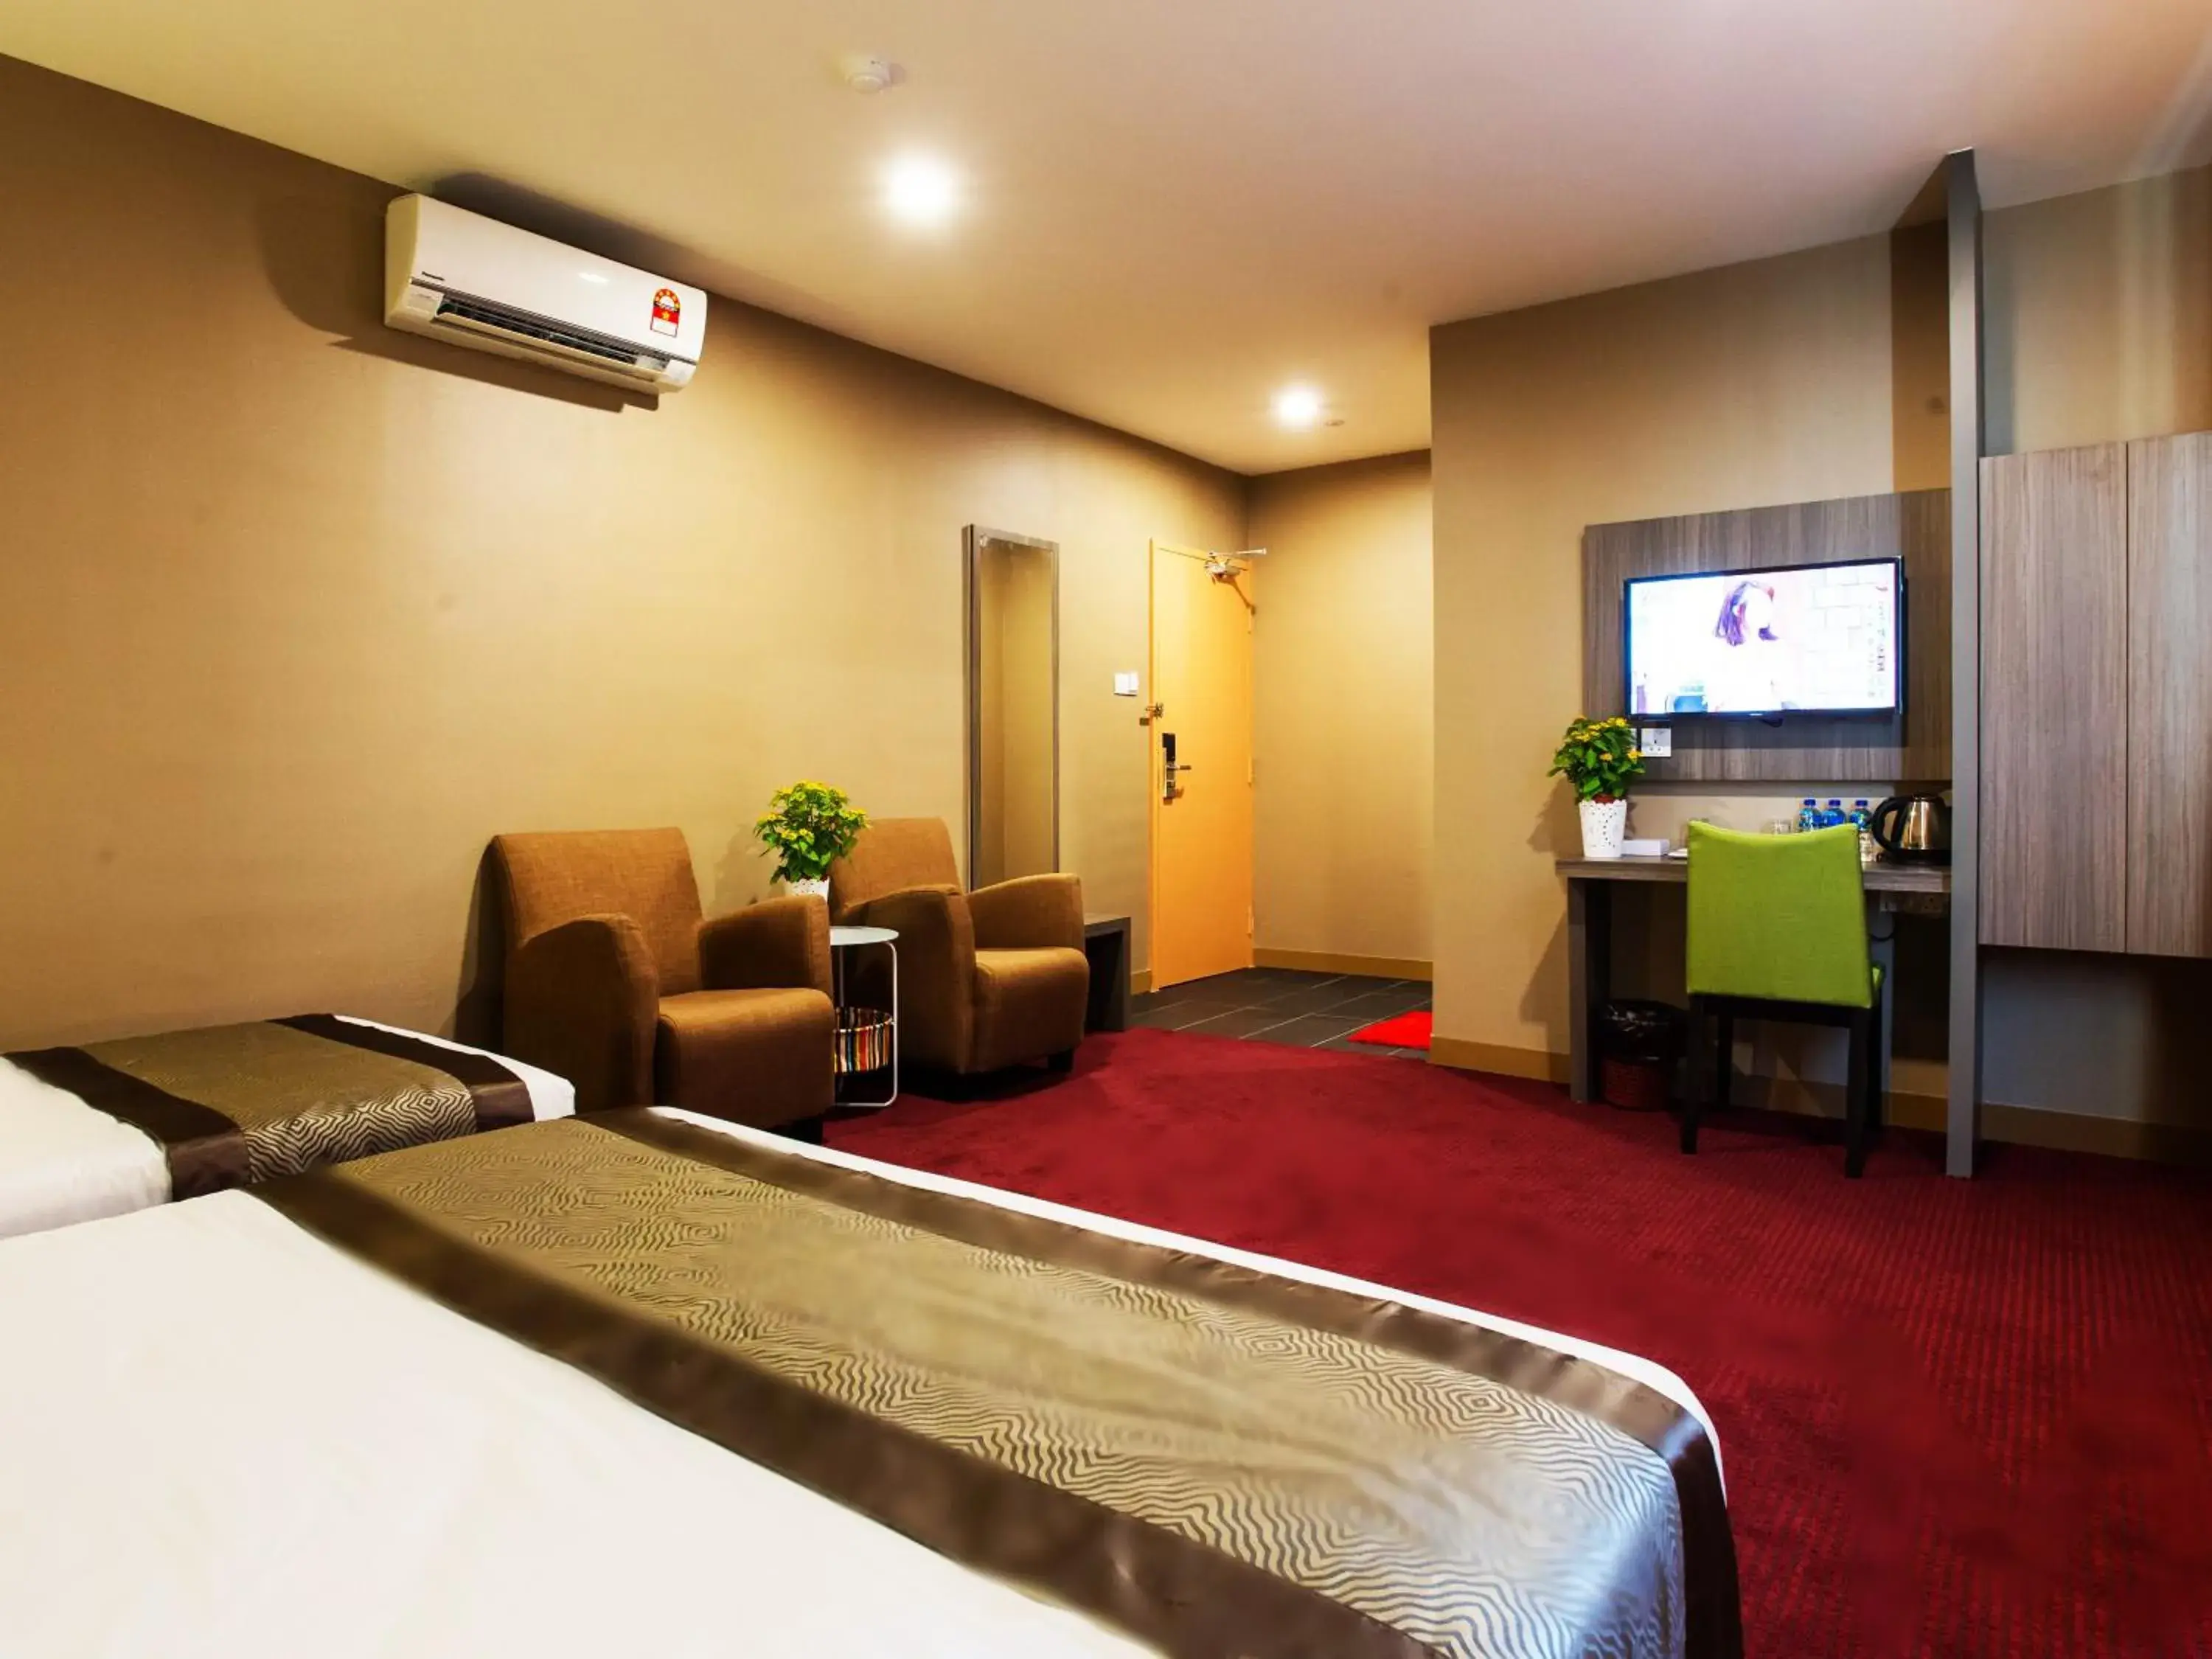 Bedroom, Lounge/Bar in LS Hotel